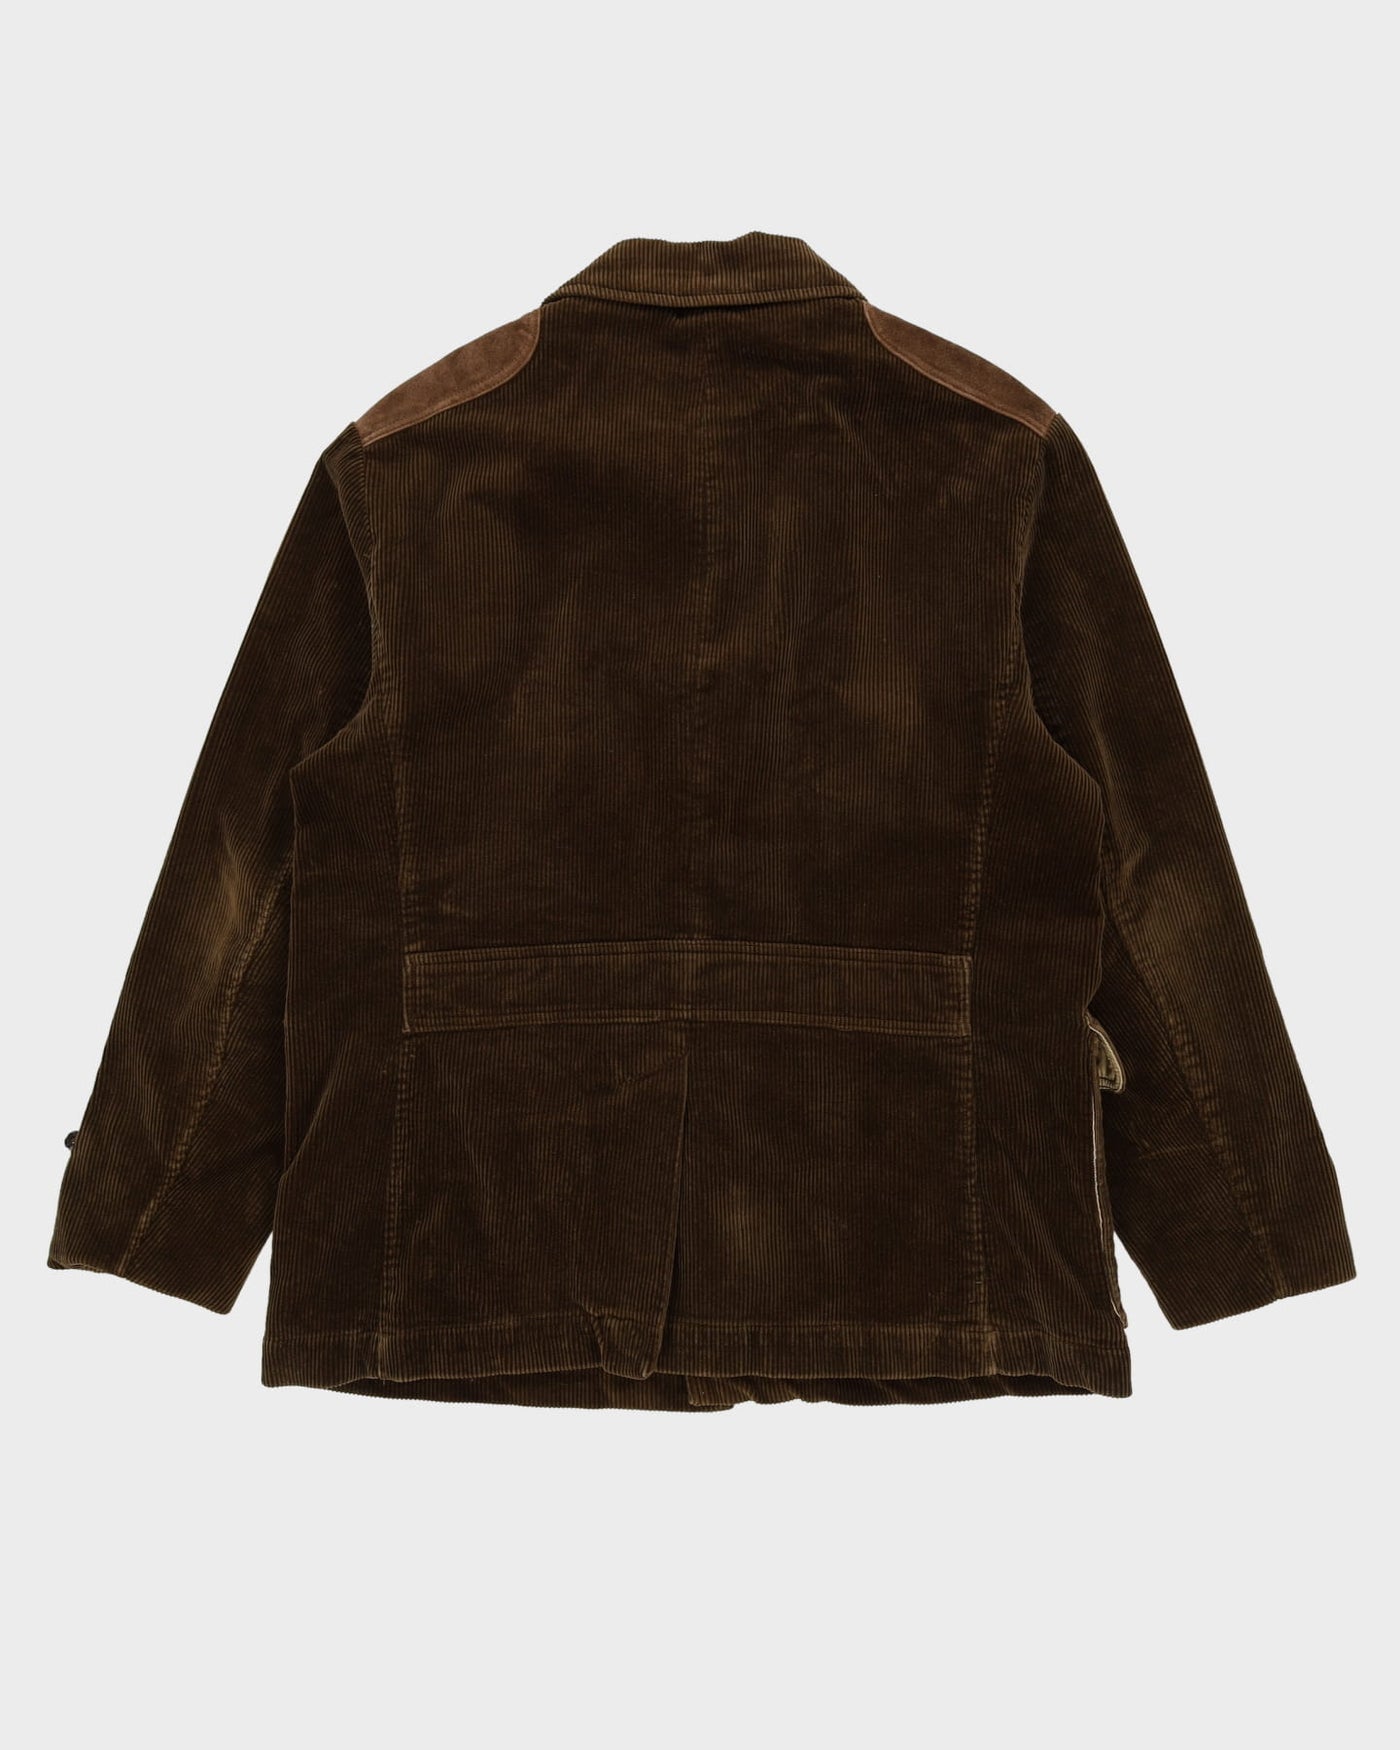 Polo Ralph Lauren Brown Cord Jacket - XL